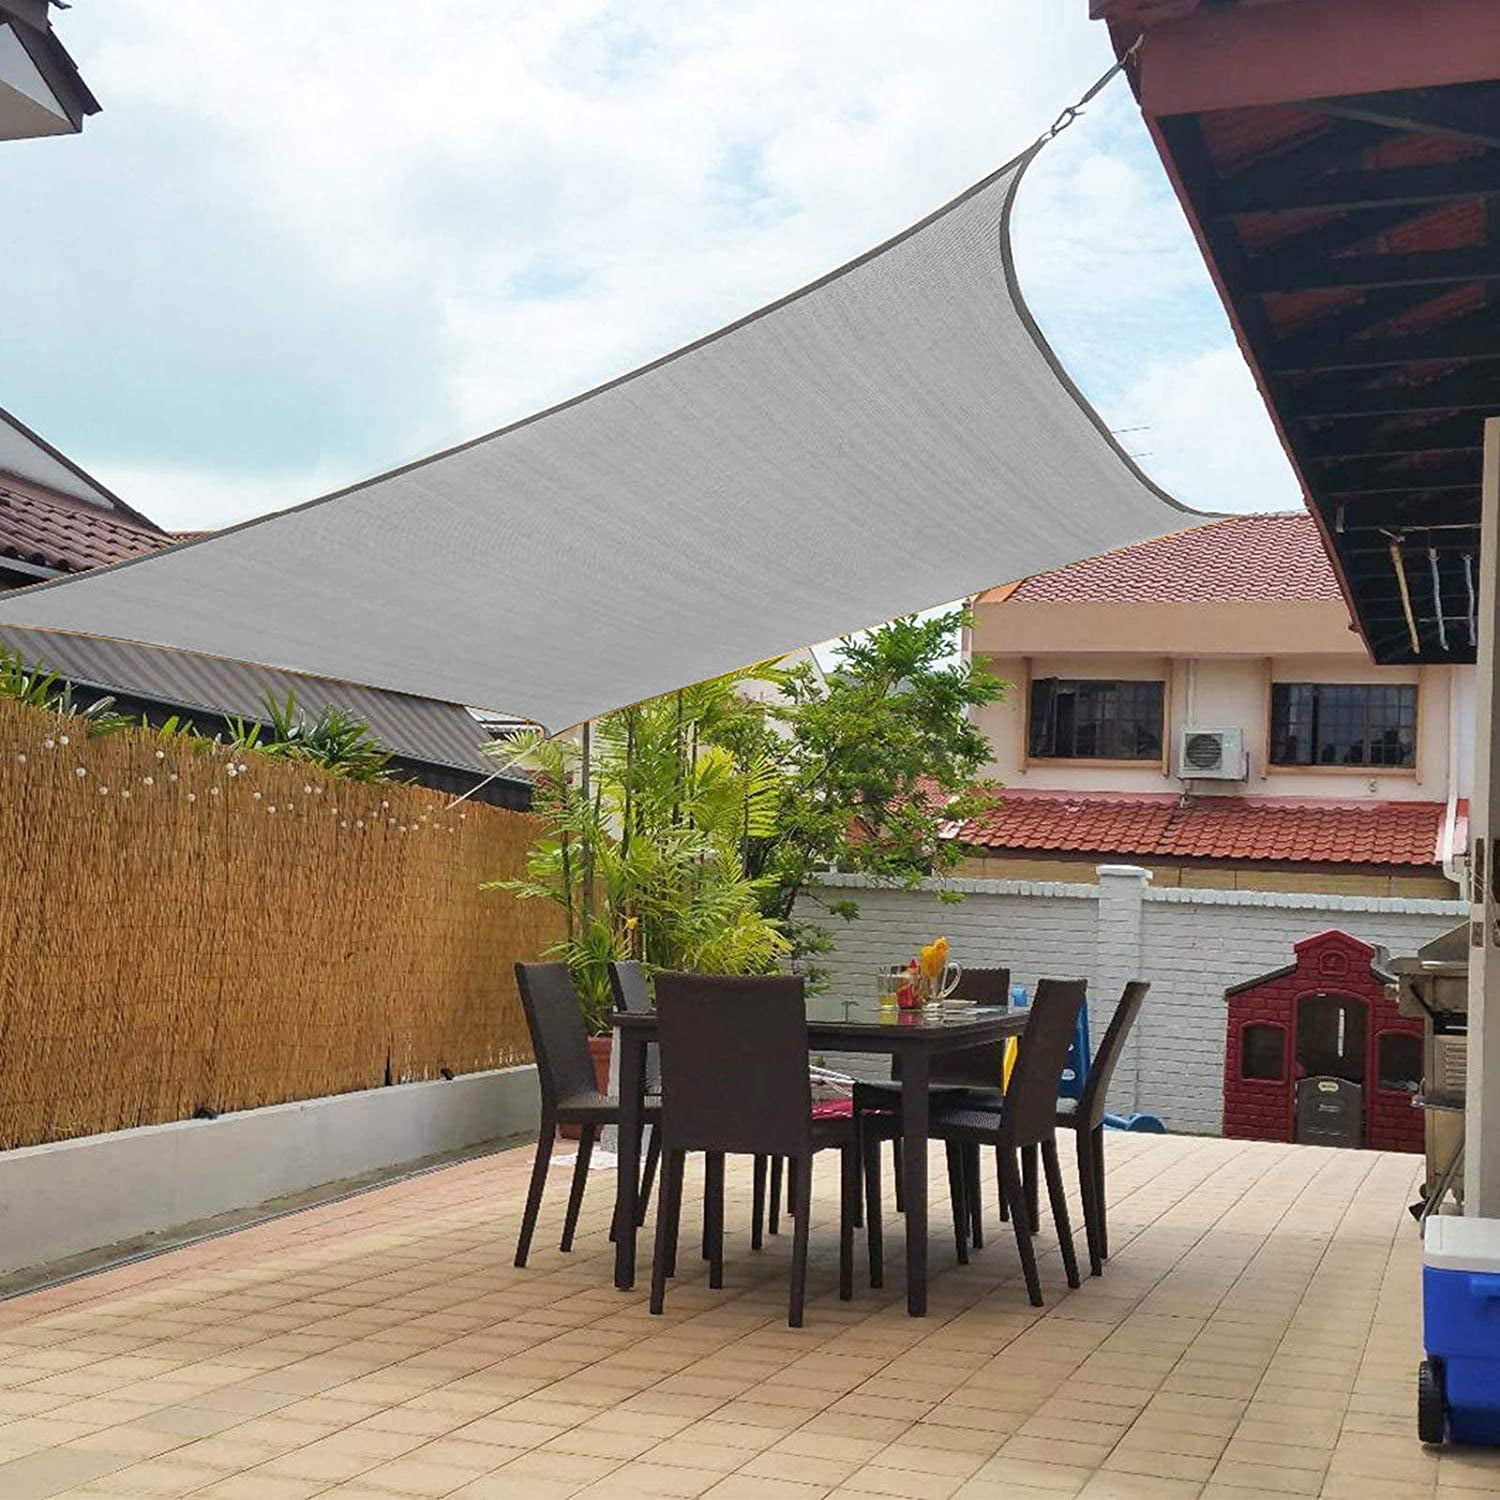 3m x 2m Sun Shade Sail Garden Patio Canopy Awning Screen 98% UV Block Cream New 